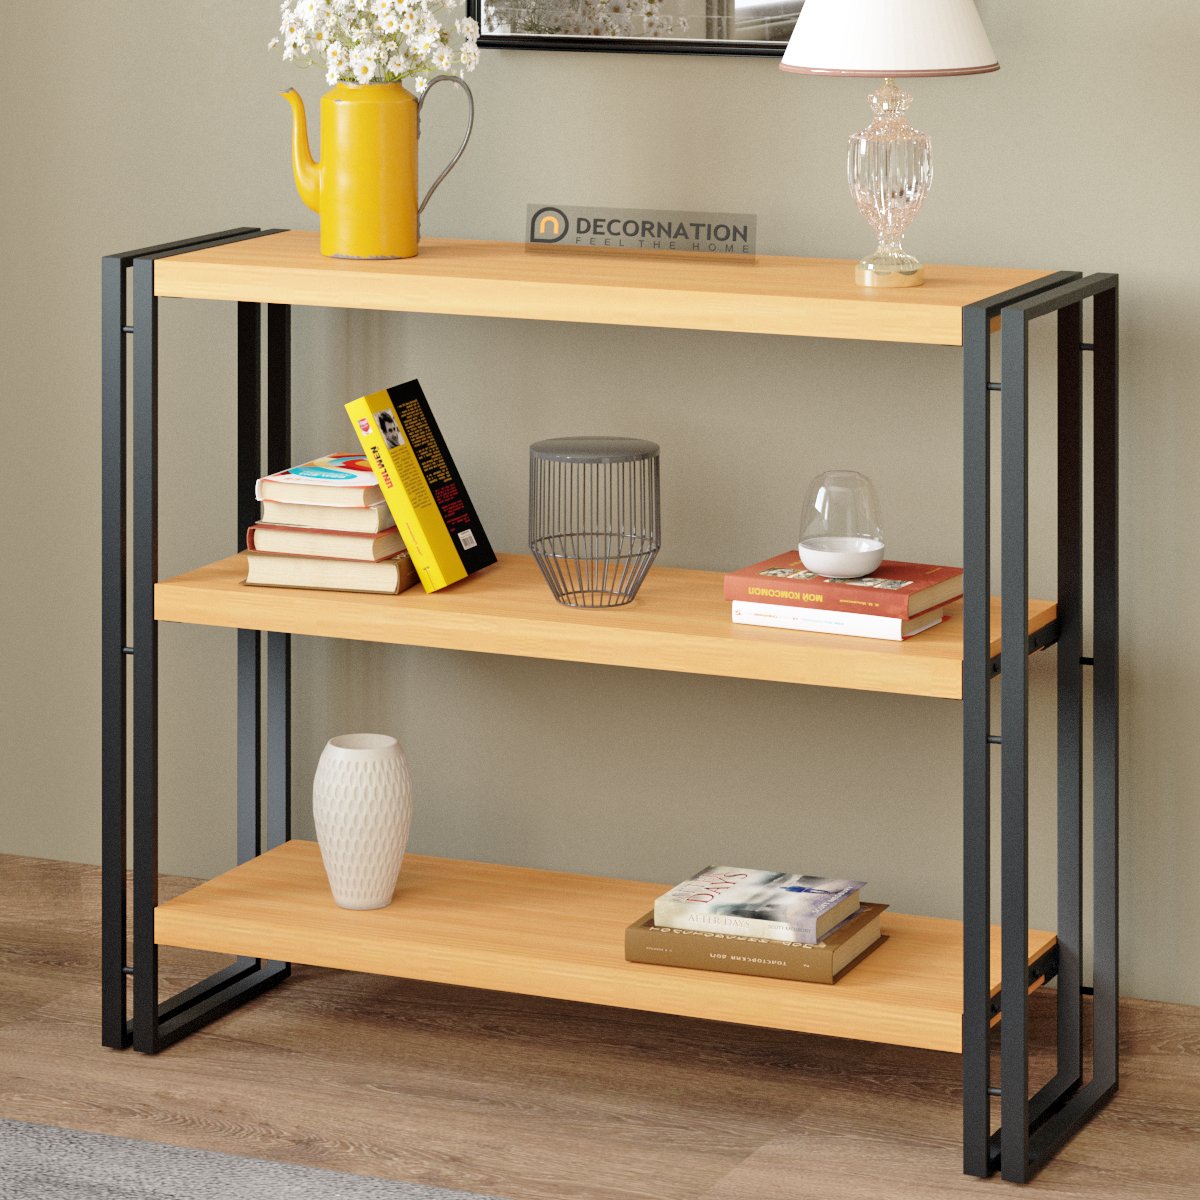 Indsutrial Rustic Book Shelf with Iron Legs – Beige